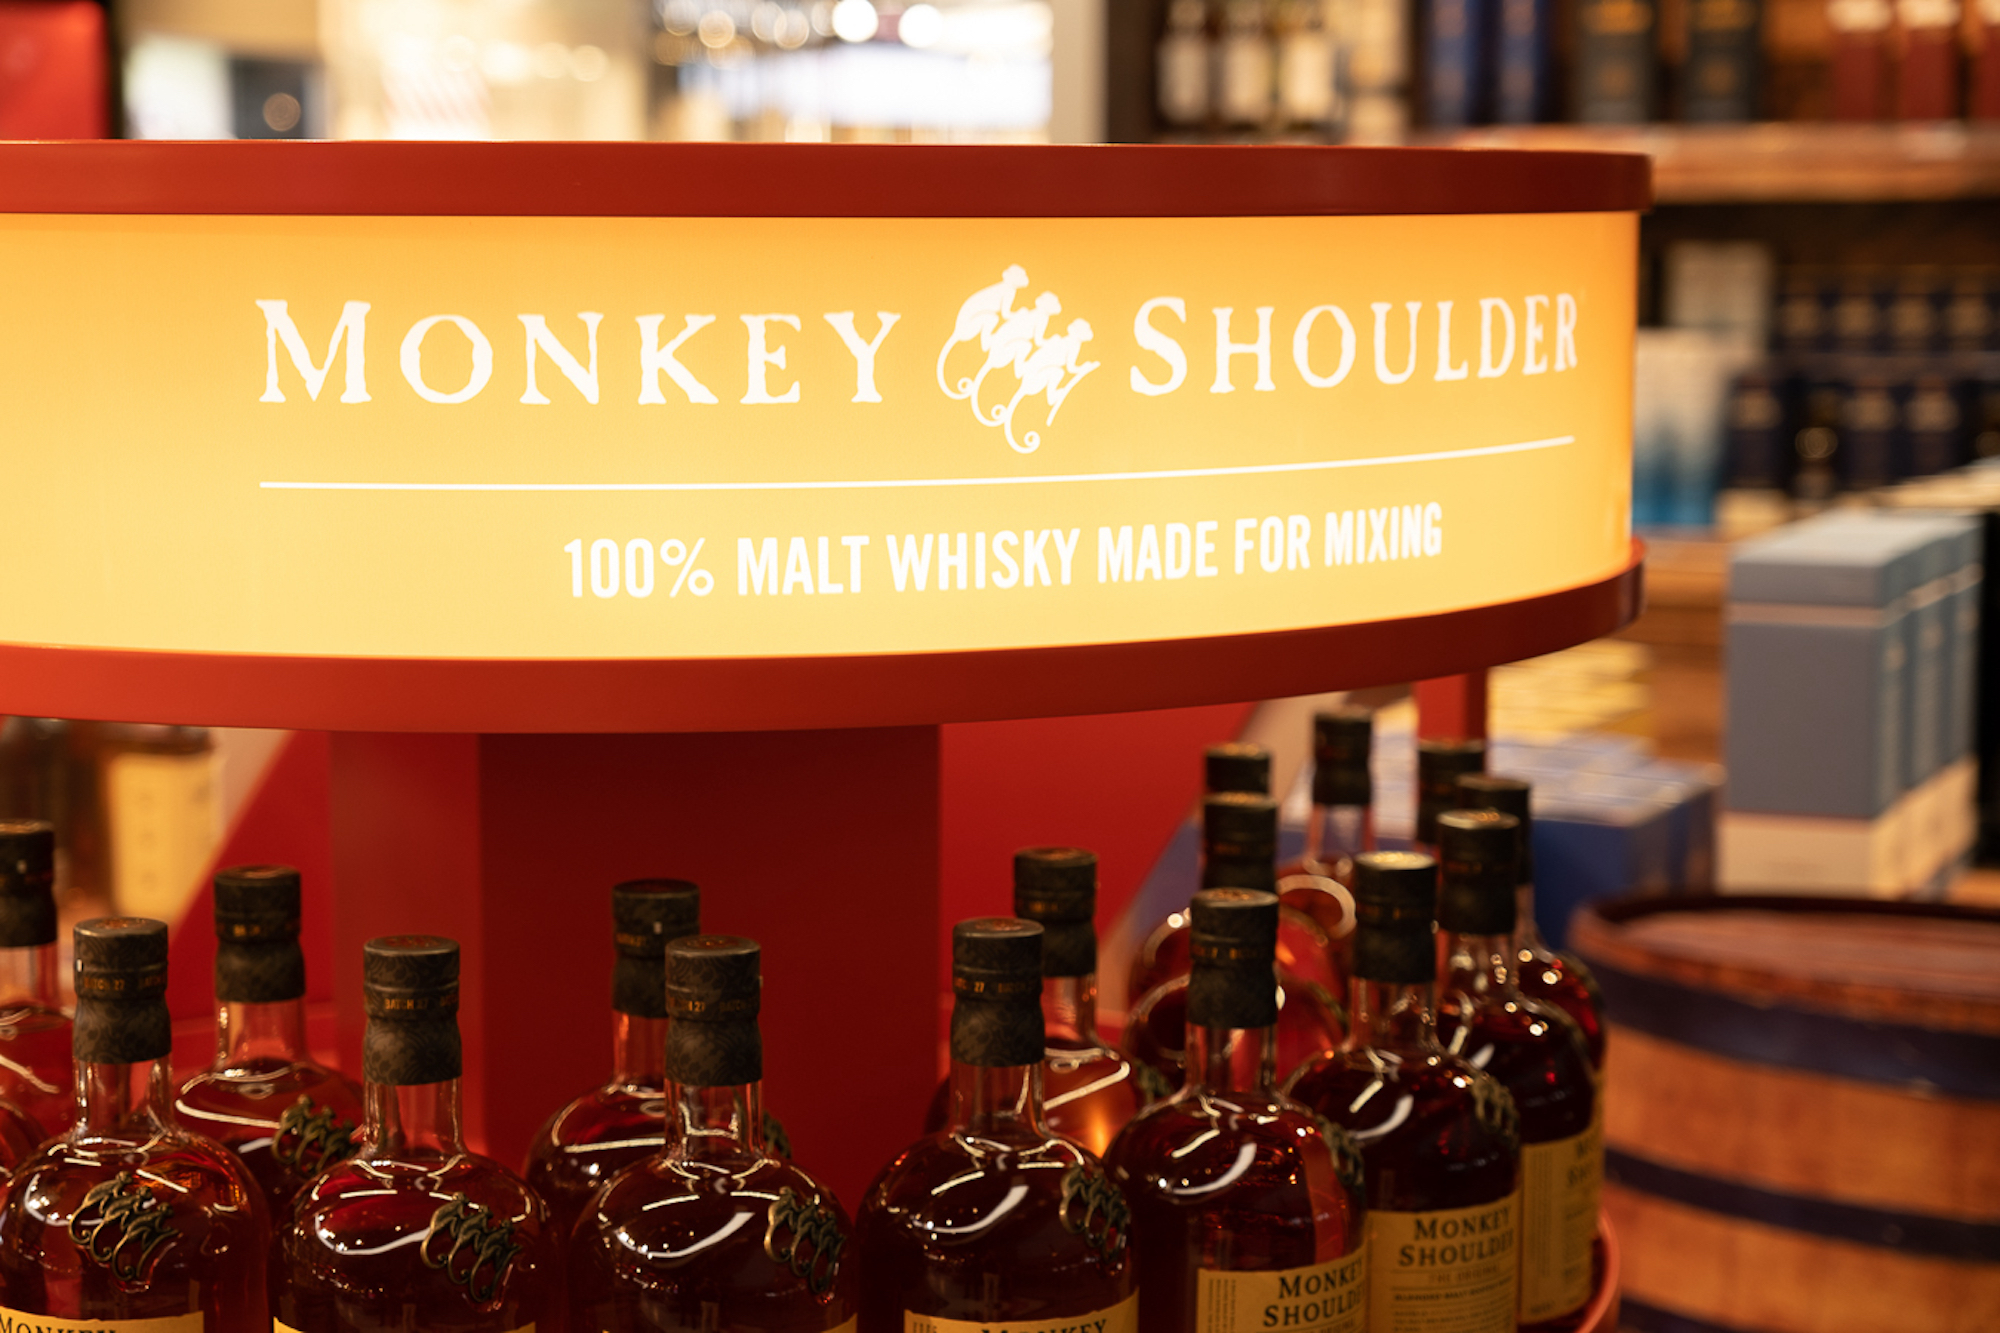 Monkey Shoulder airport brand activation